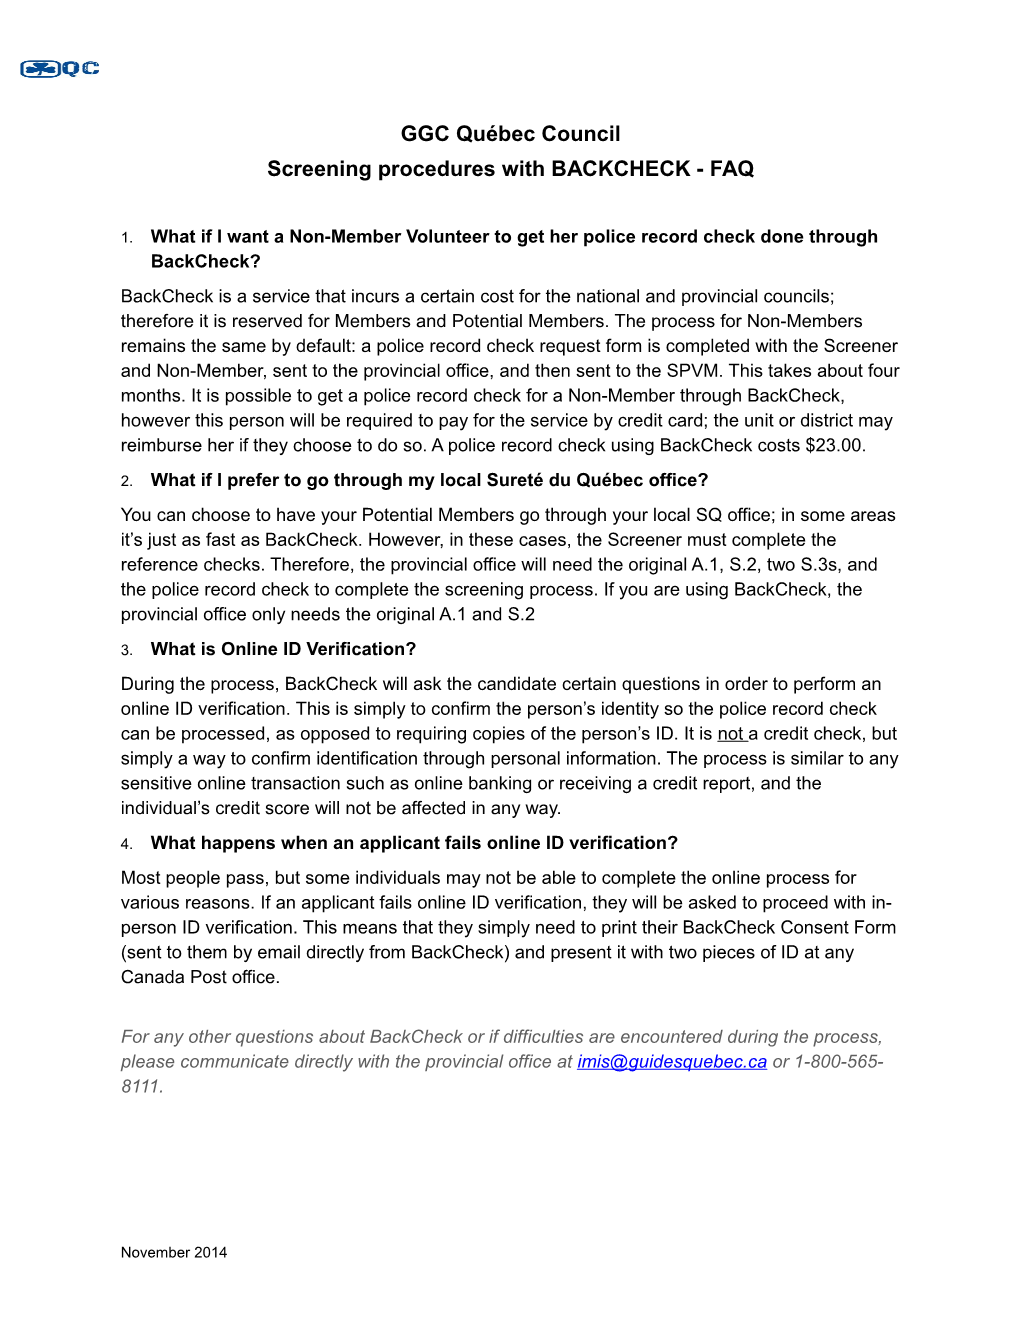 Screening Procedures with BACKCHECK - FAQ